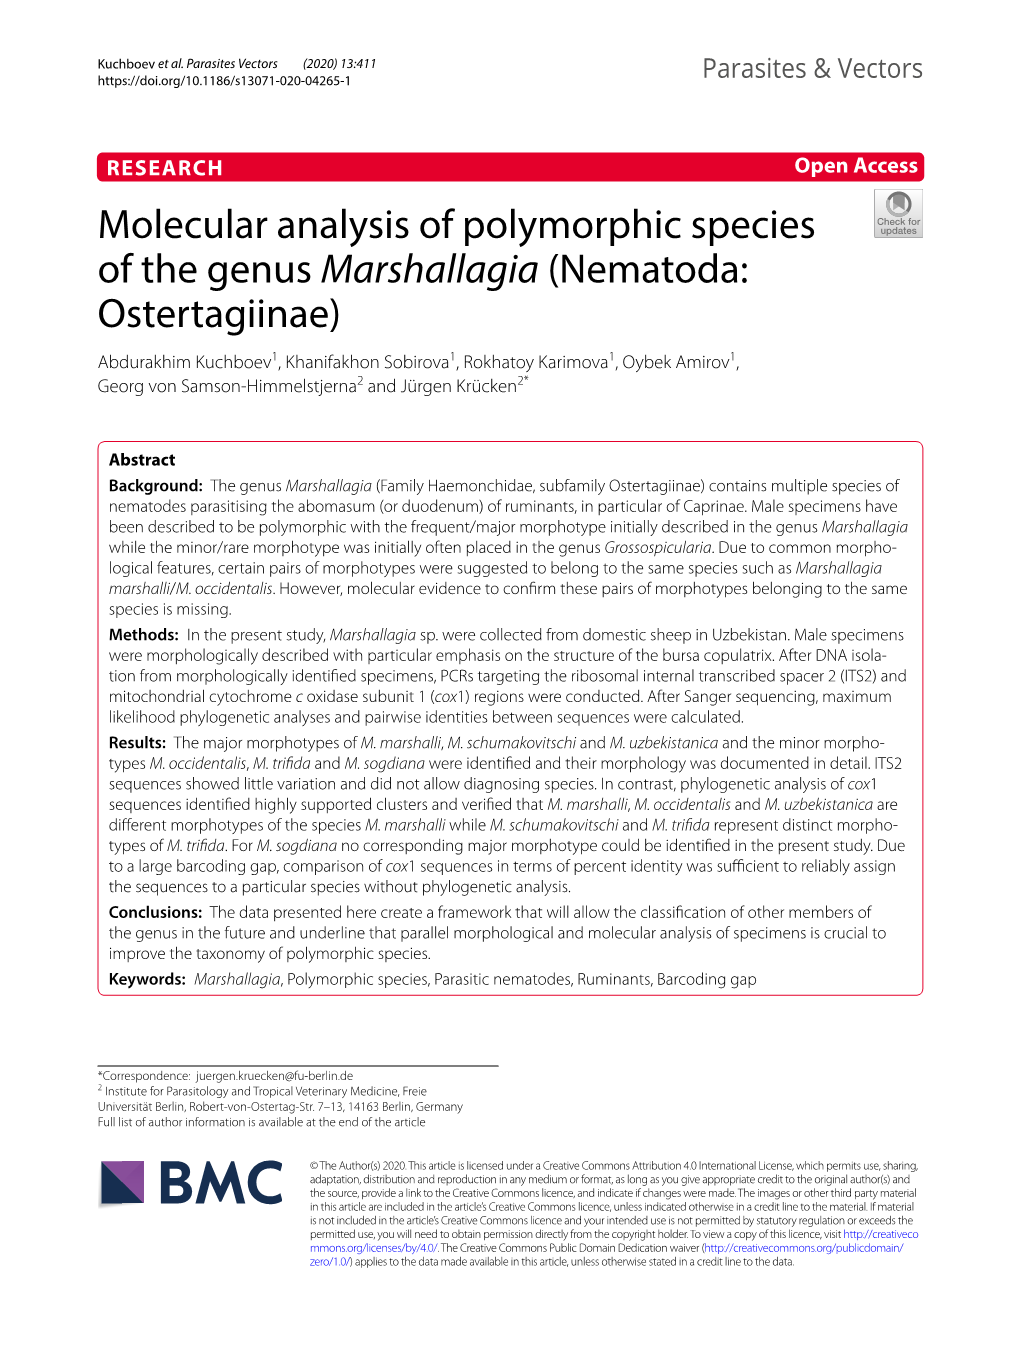 Molecular Analysis of Polymorphic Species of the Genus Marshallagia